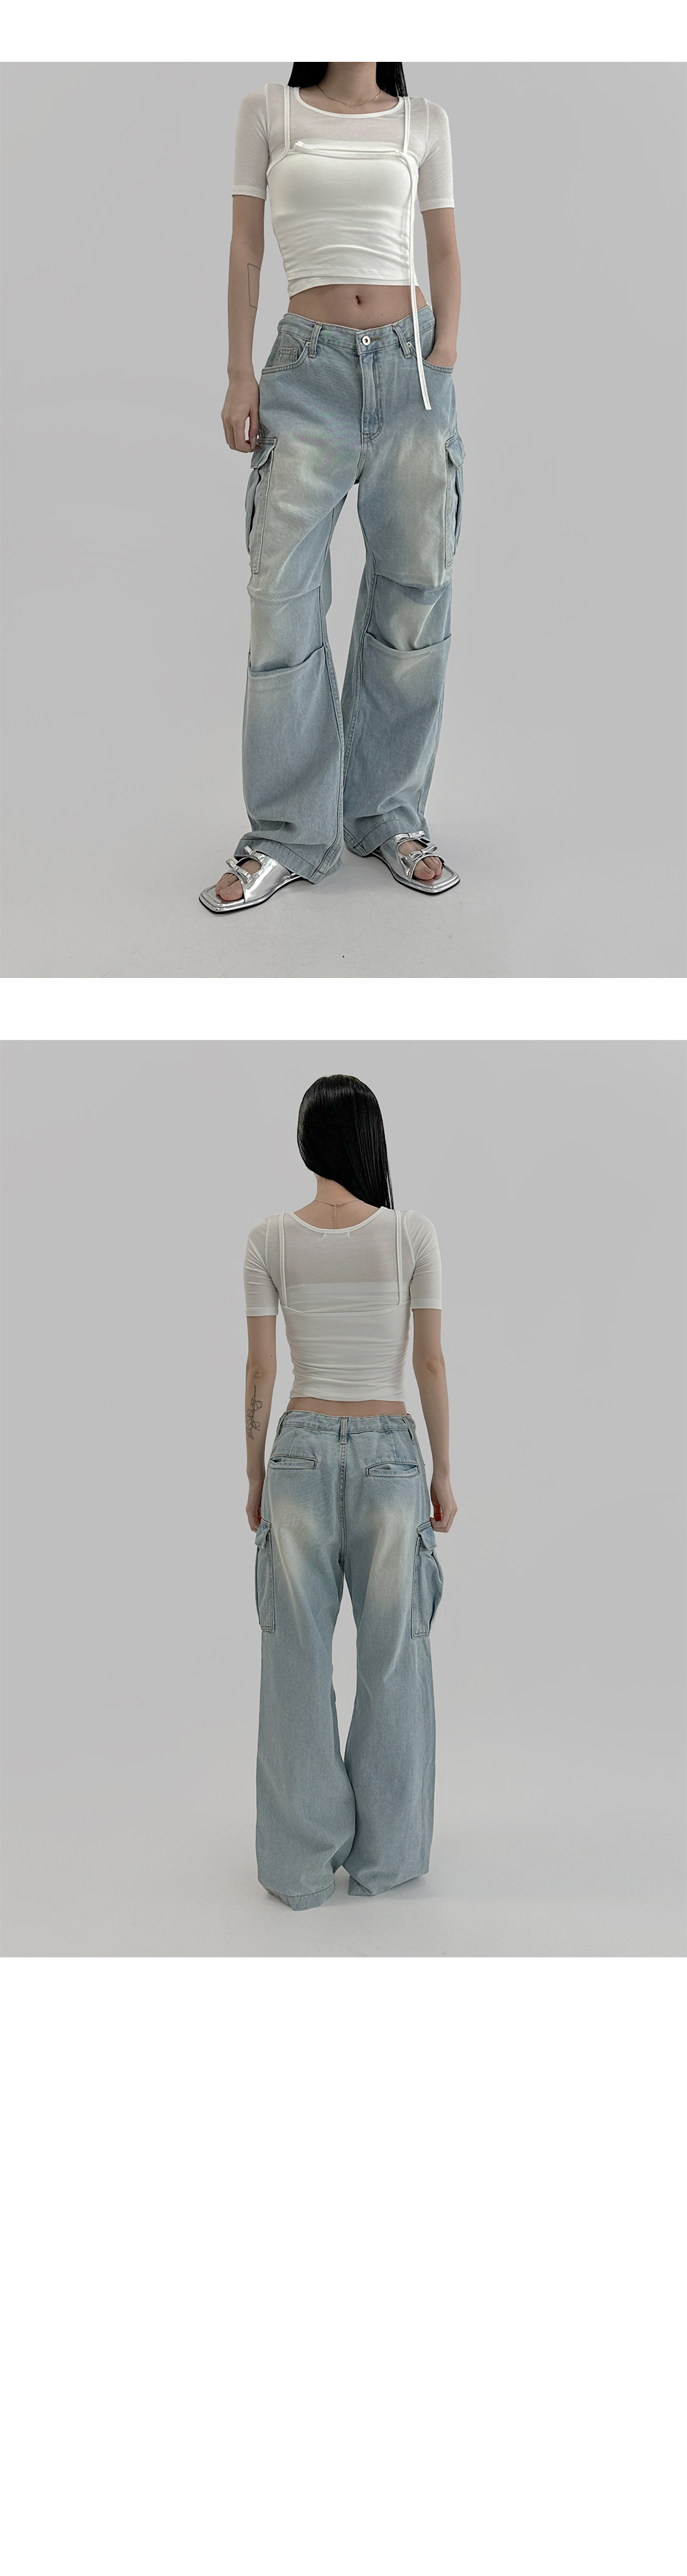 suspenders skirt/pants model image-S1L23